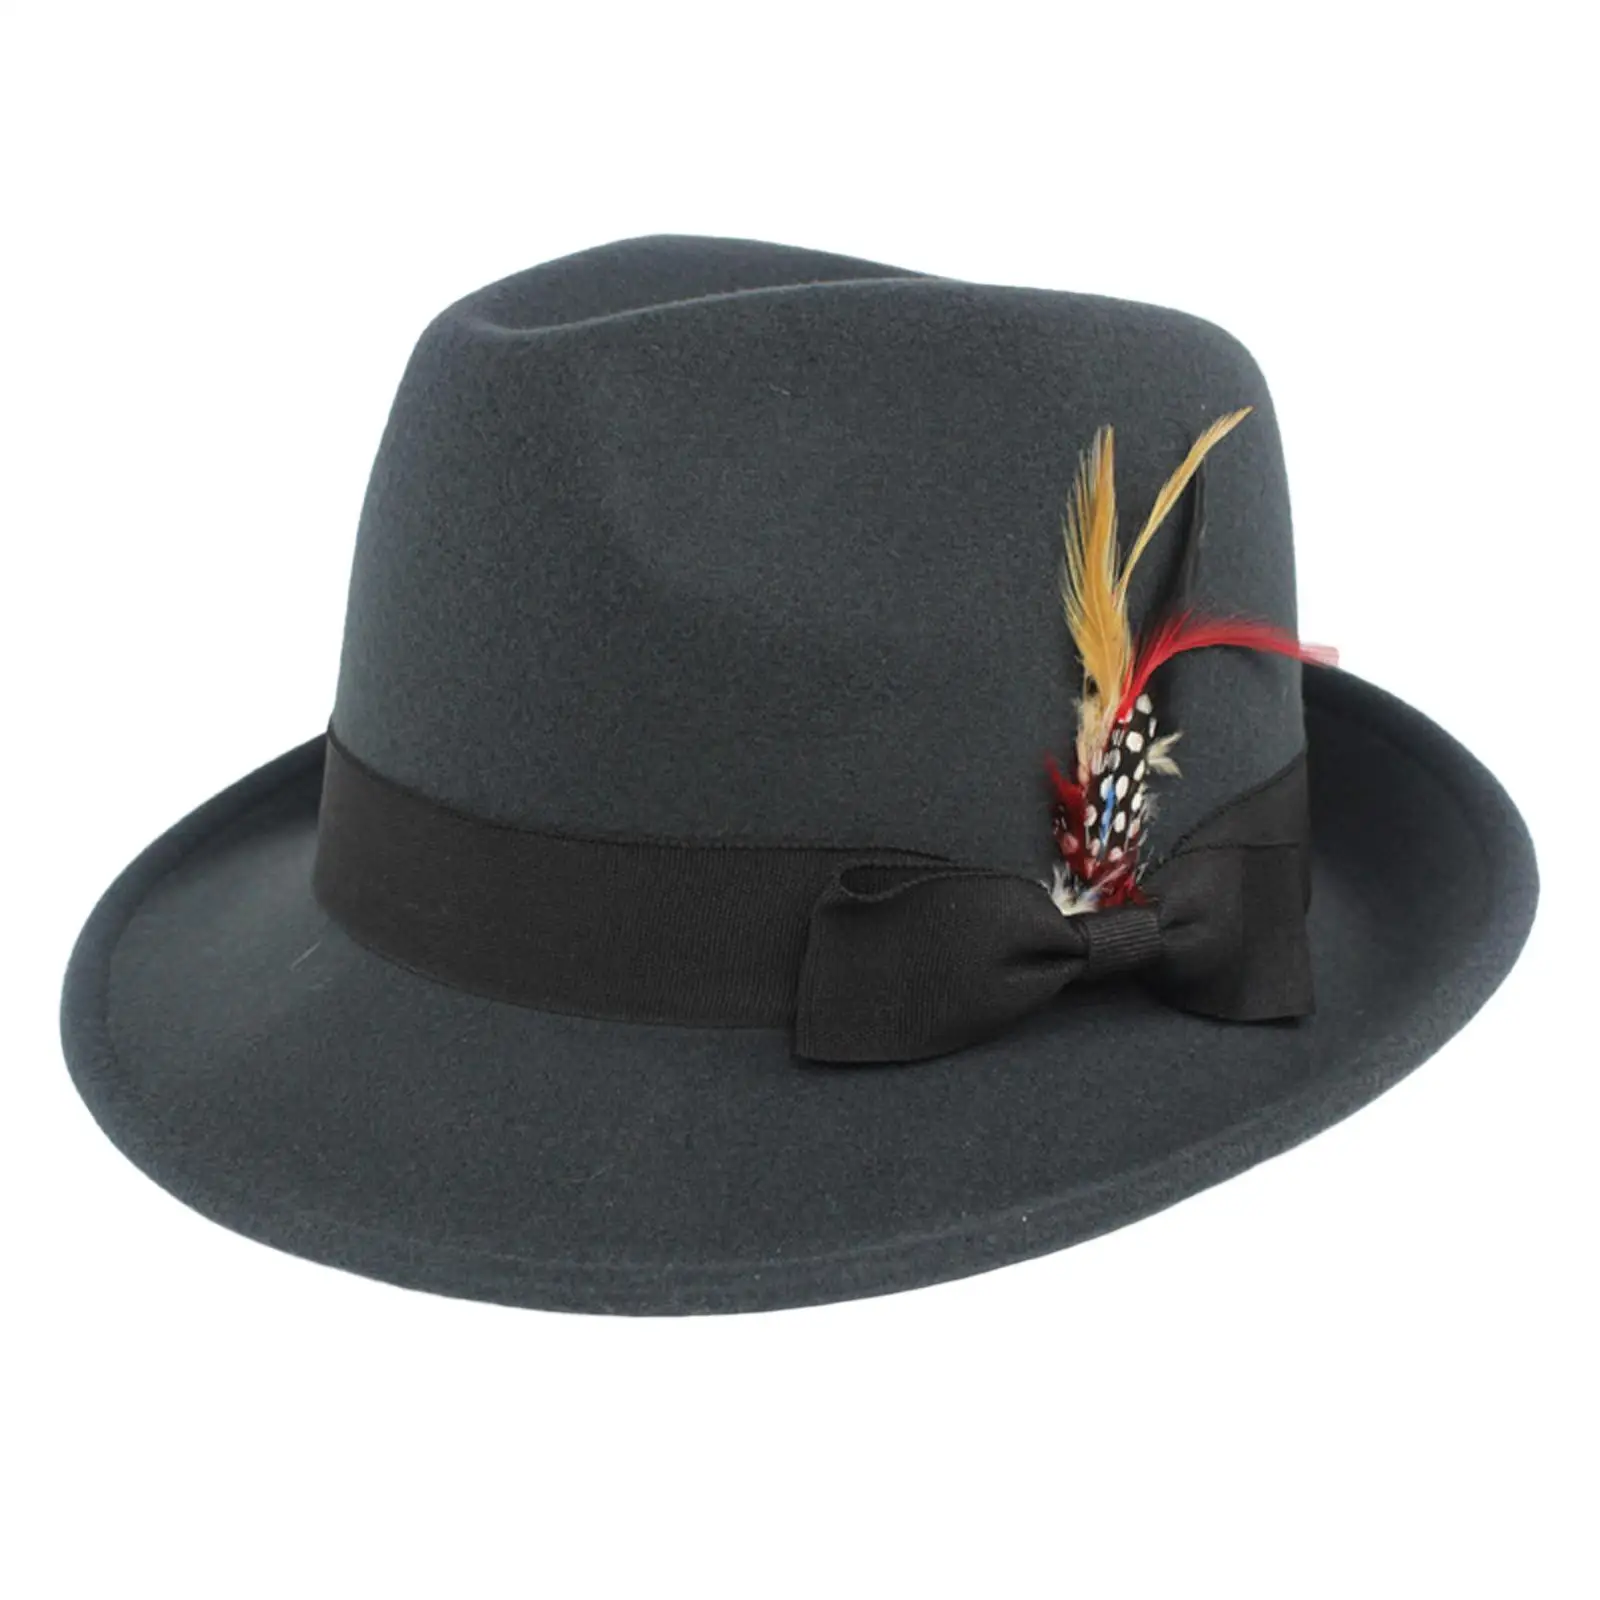 Panama Jazz Top Hat Short Brim Sunhat Photo Props Casual Felt Fedora Hats for Men and Women Dress up Accessories Decorative